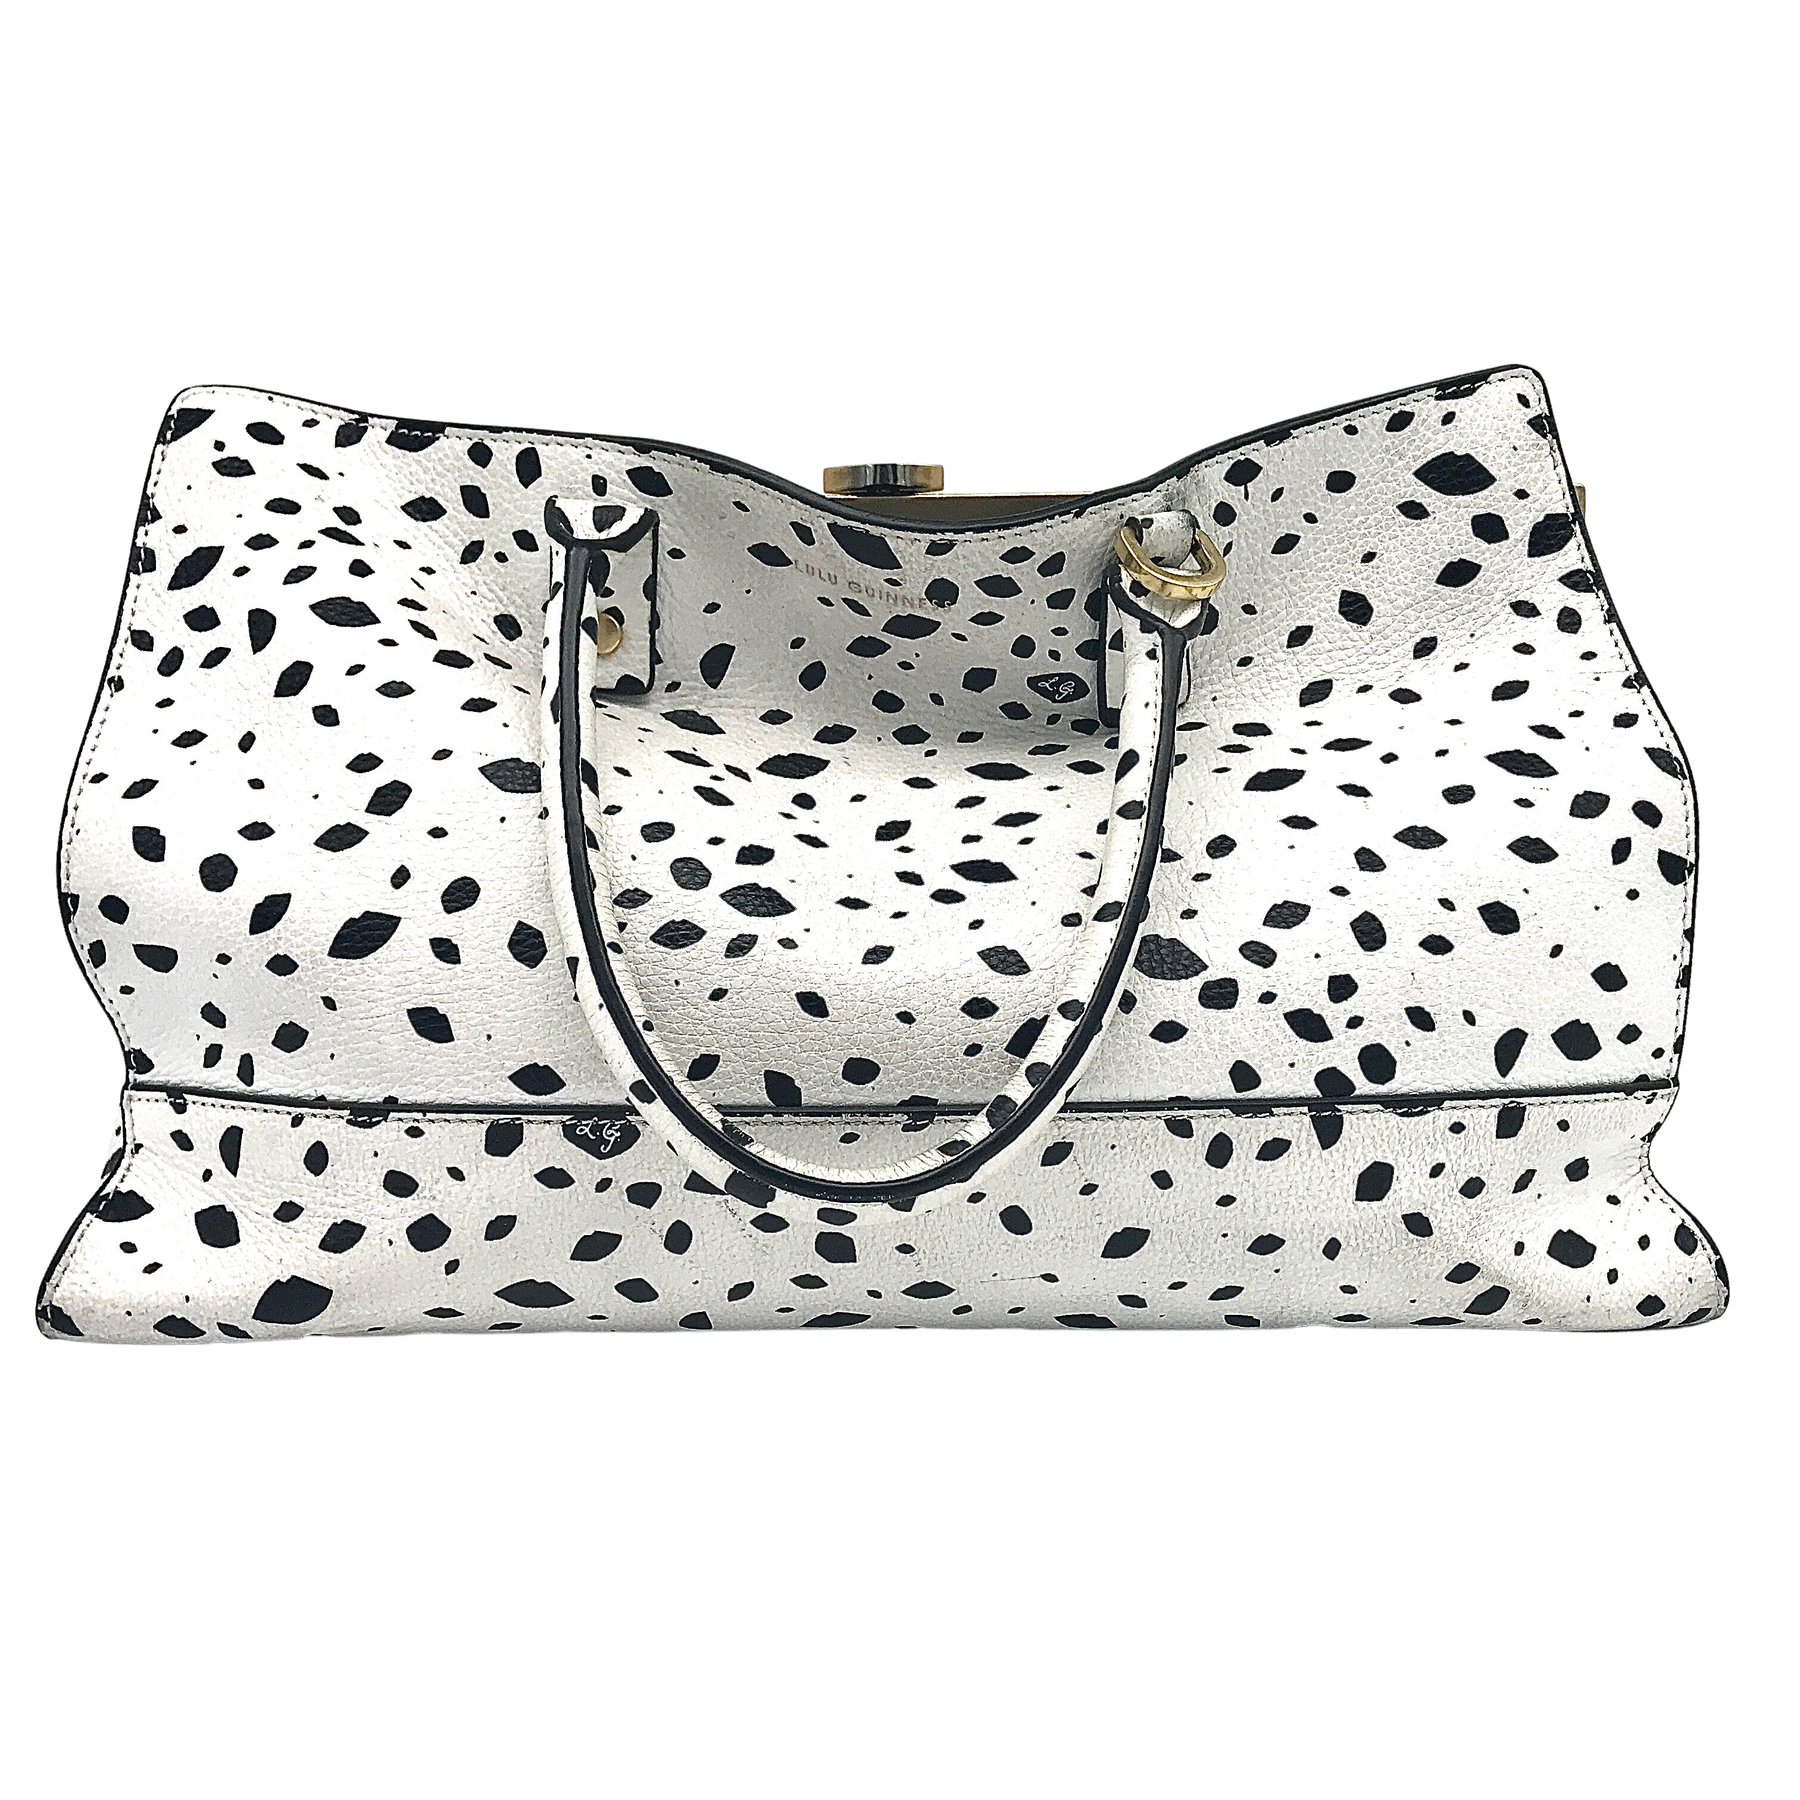 Lulu Guinness Vintage Handbags - 4 For Sale on 1stDibs | lulu guinness sale,  vintage lulu guinness handbags, lulu guinness straw bag